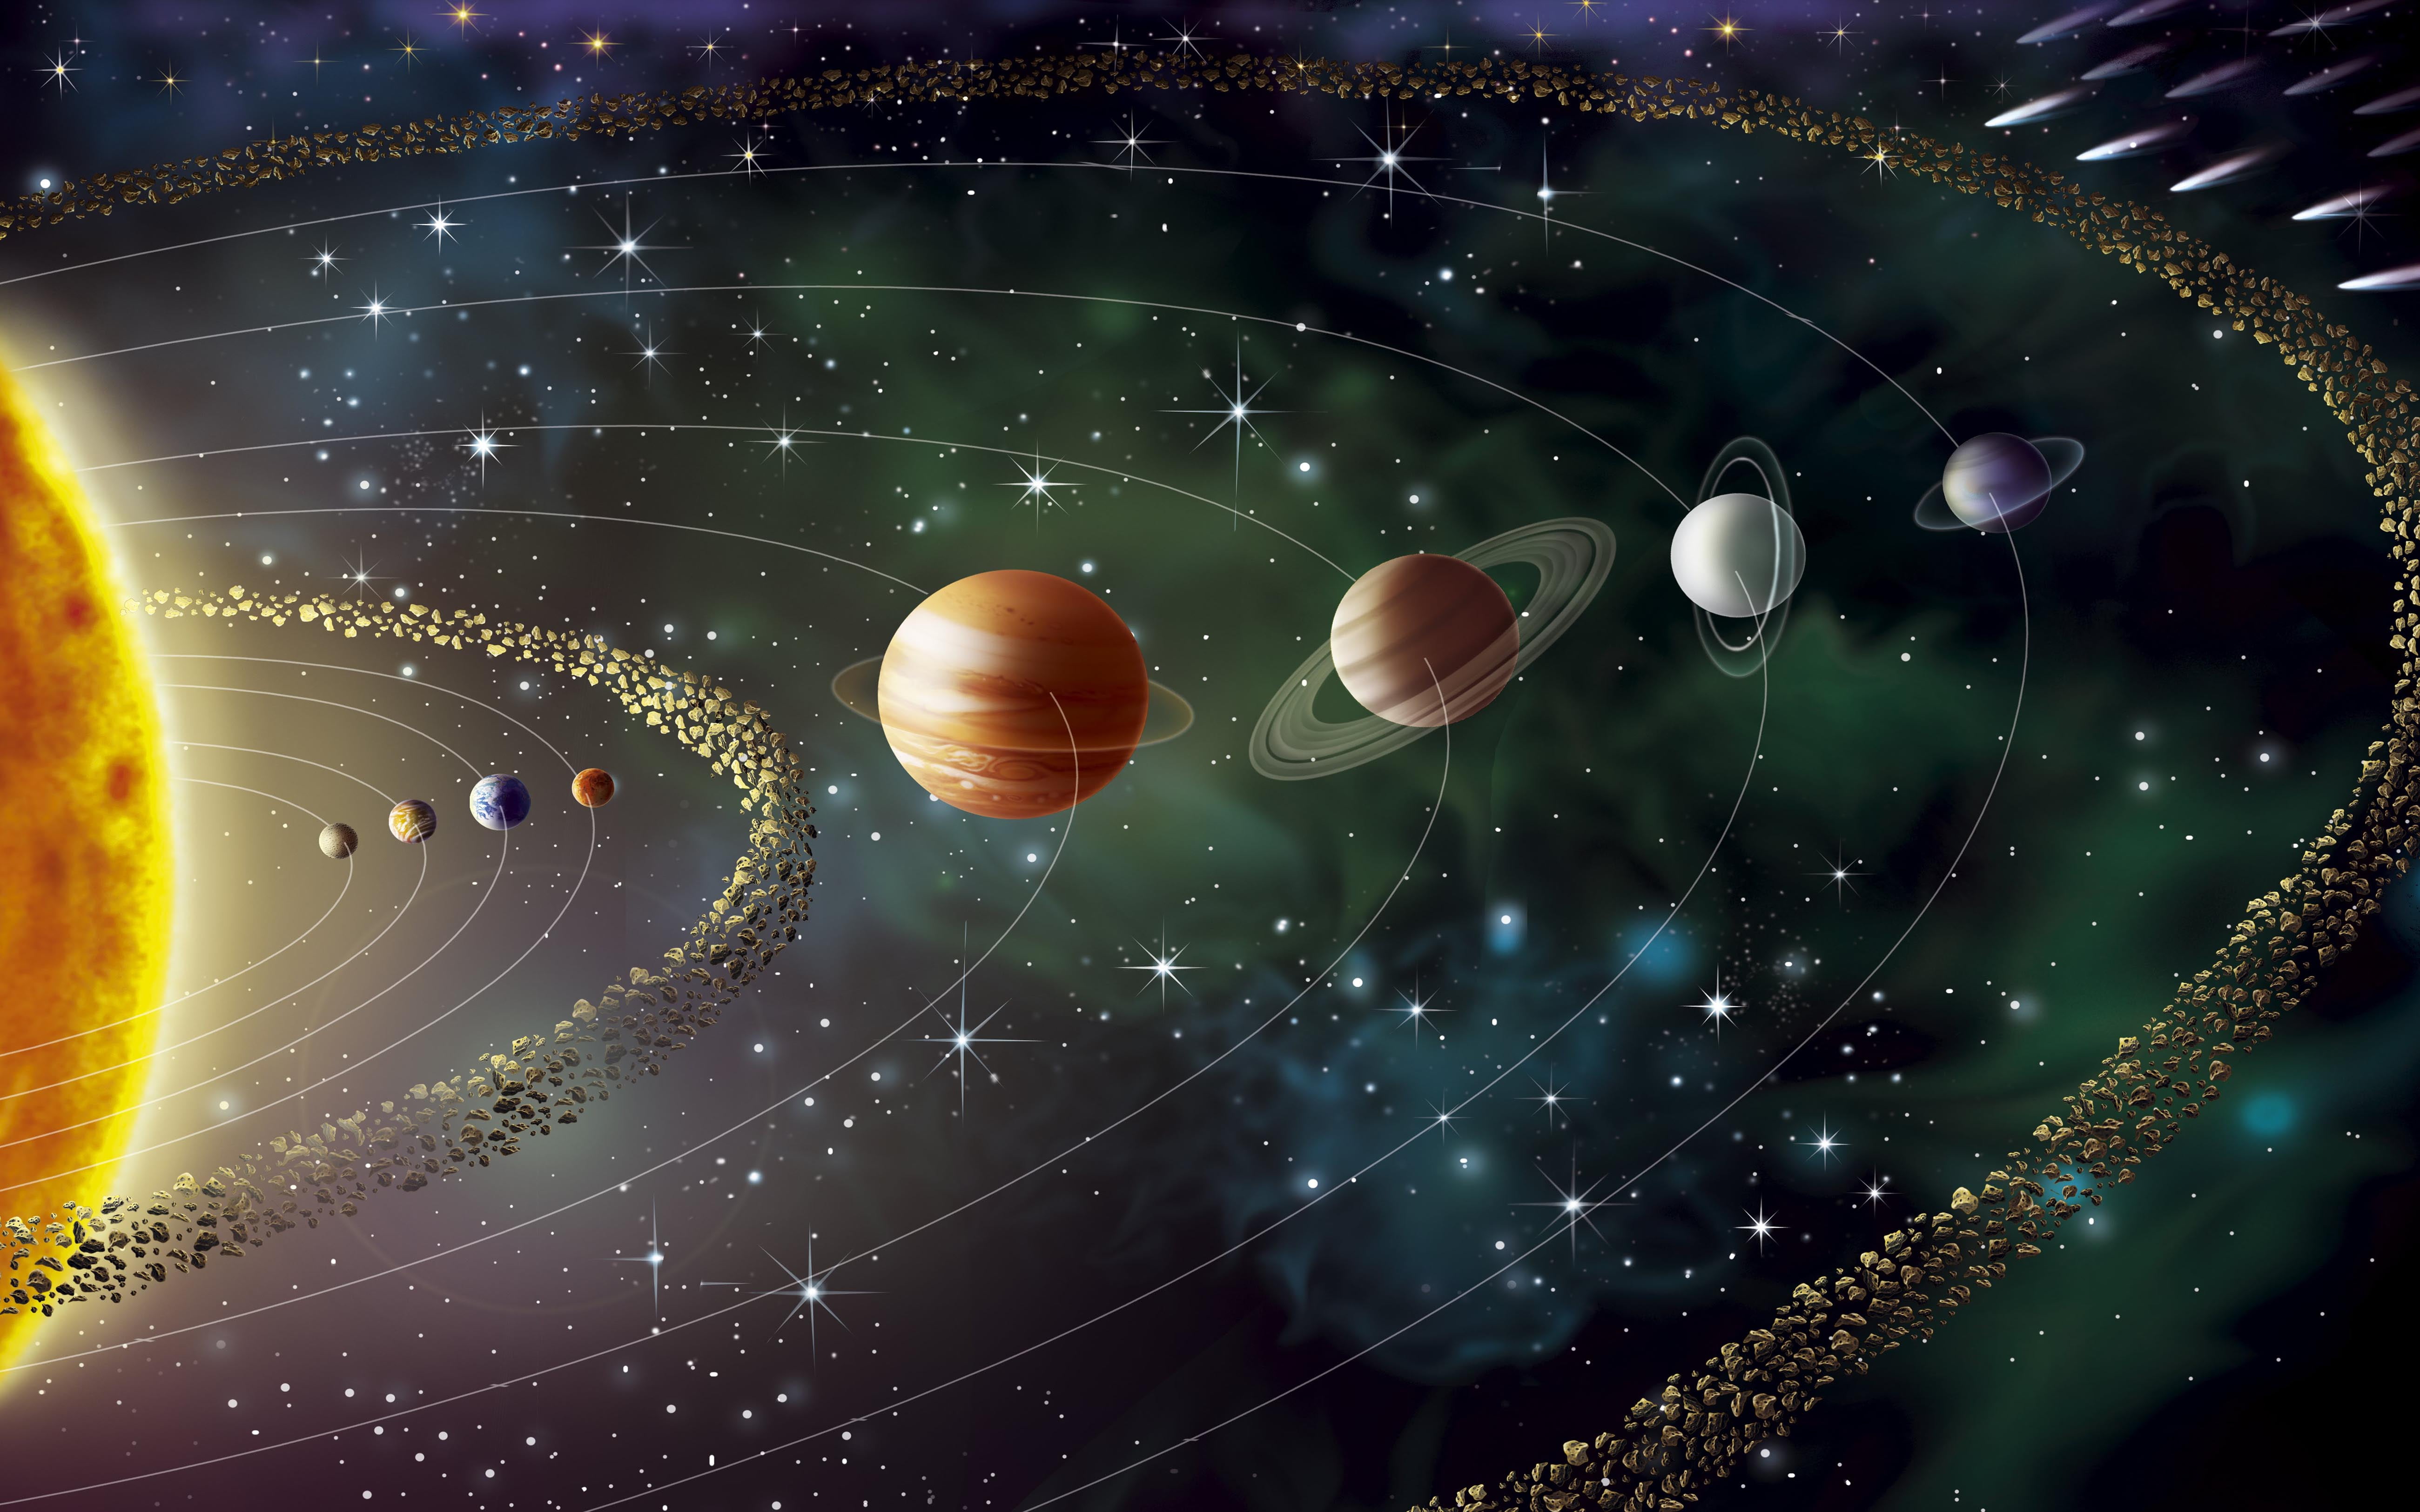 Solar System With Planets Mercury Venus Earth Mars Asteroid Belt Jupiter Saturn Uranus Neptune And Pluton Desktop Wallpaper Hd 5200×3250